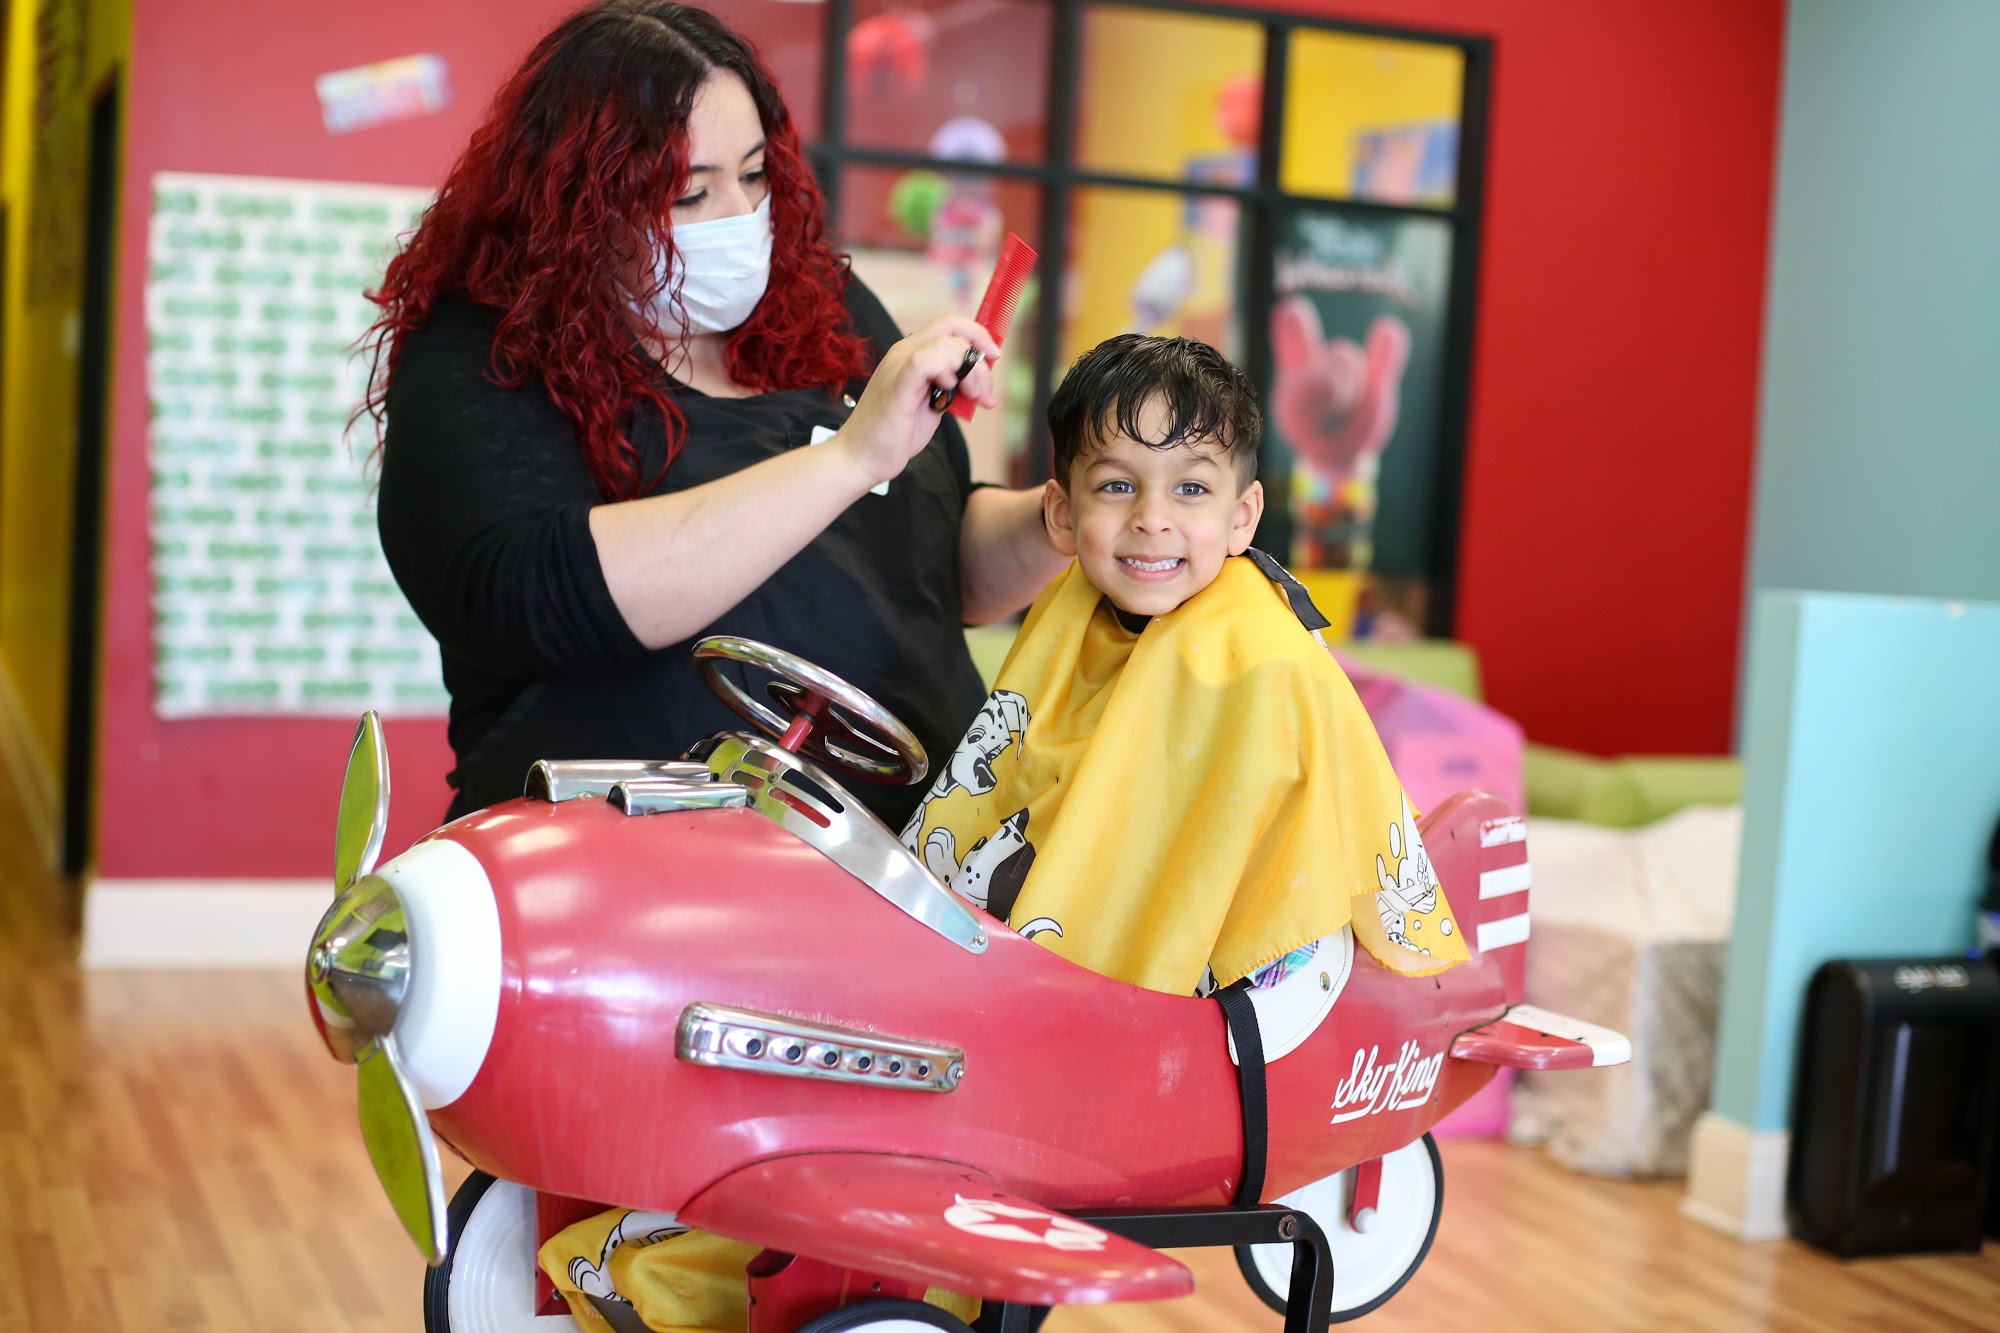 Pigtails & Crewcuts: Haircuts for Kids - Montclair, NJ